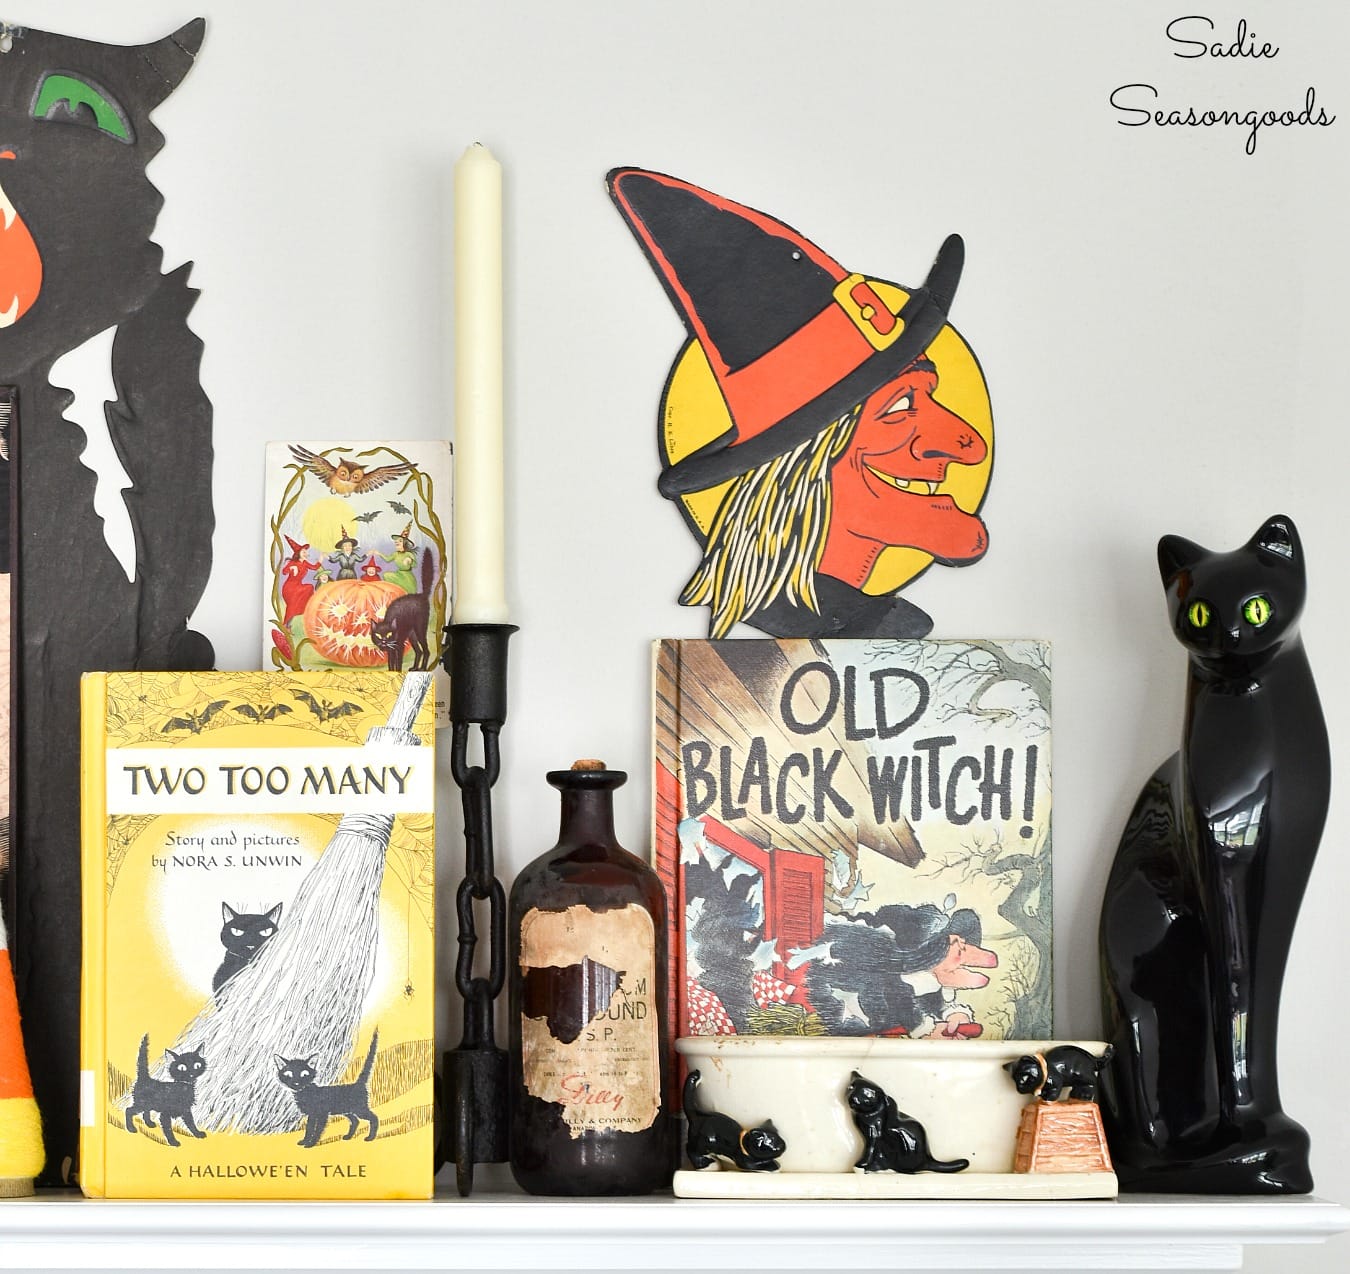 Children's Halloween books and vintage black cat decor